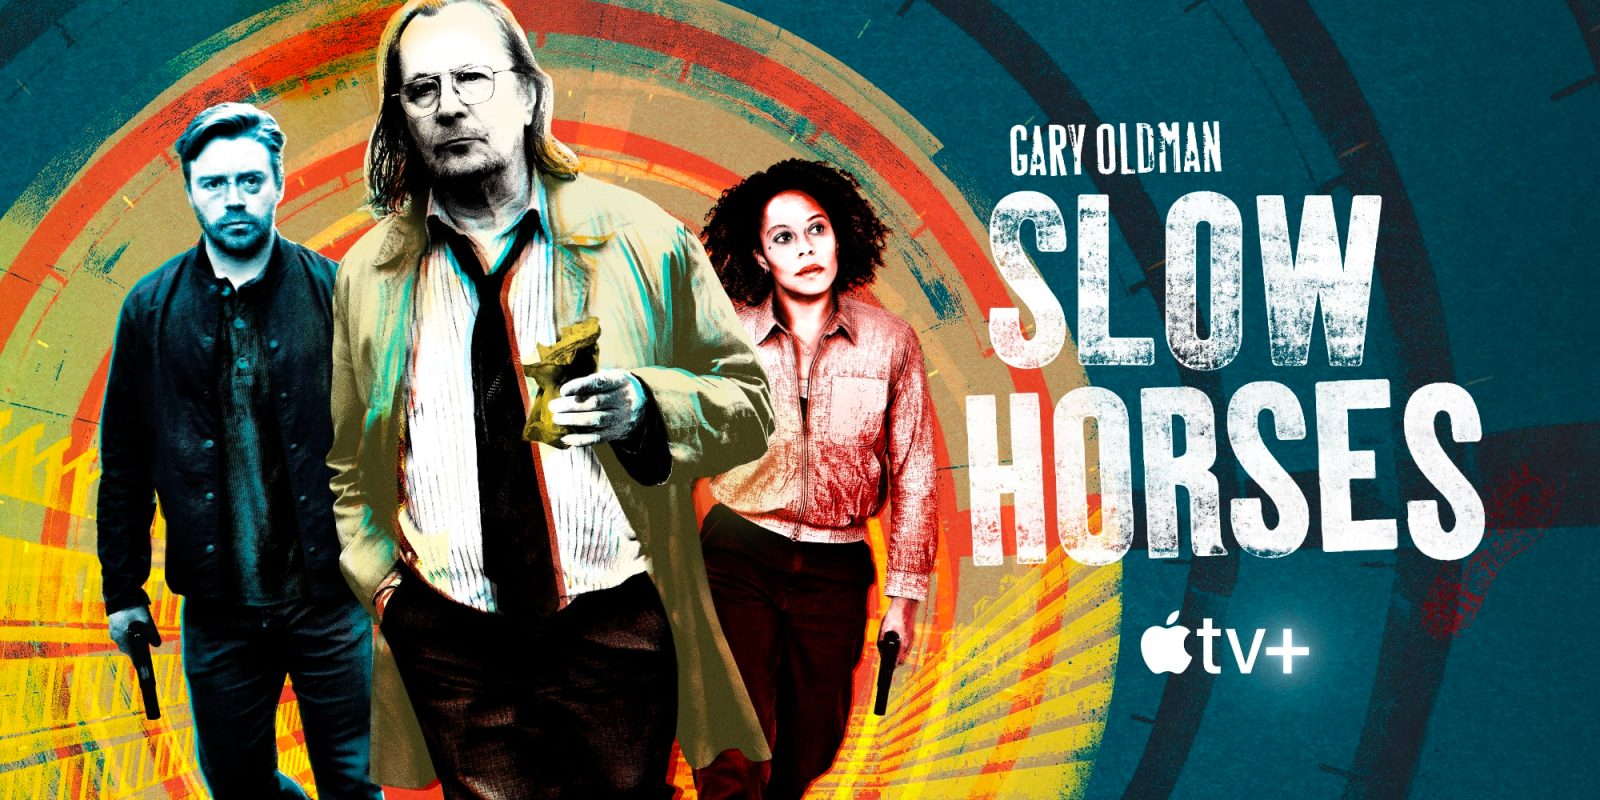 Slow horses on apple tv returns for season three